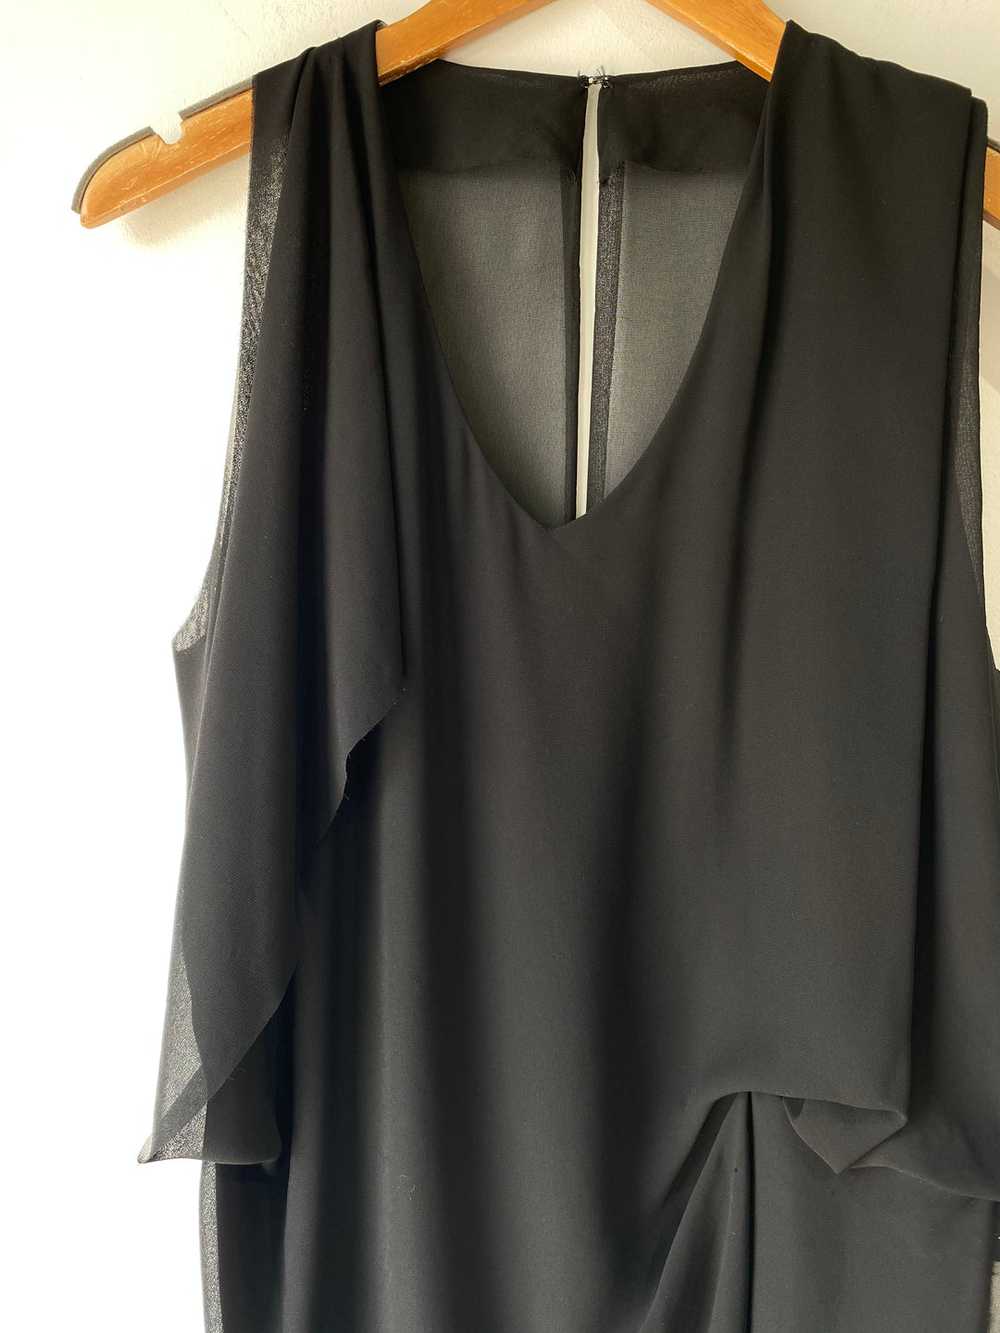 Acne Little Black Dress - image 5